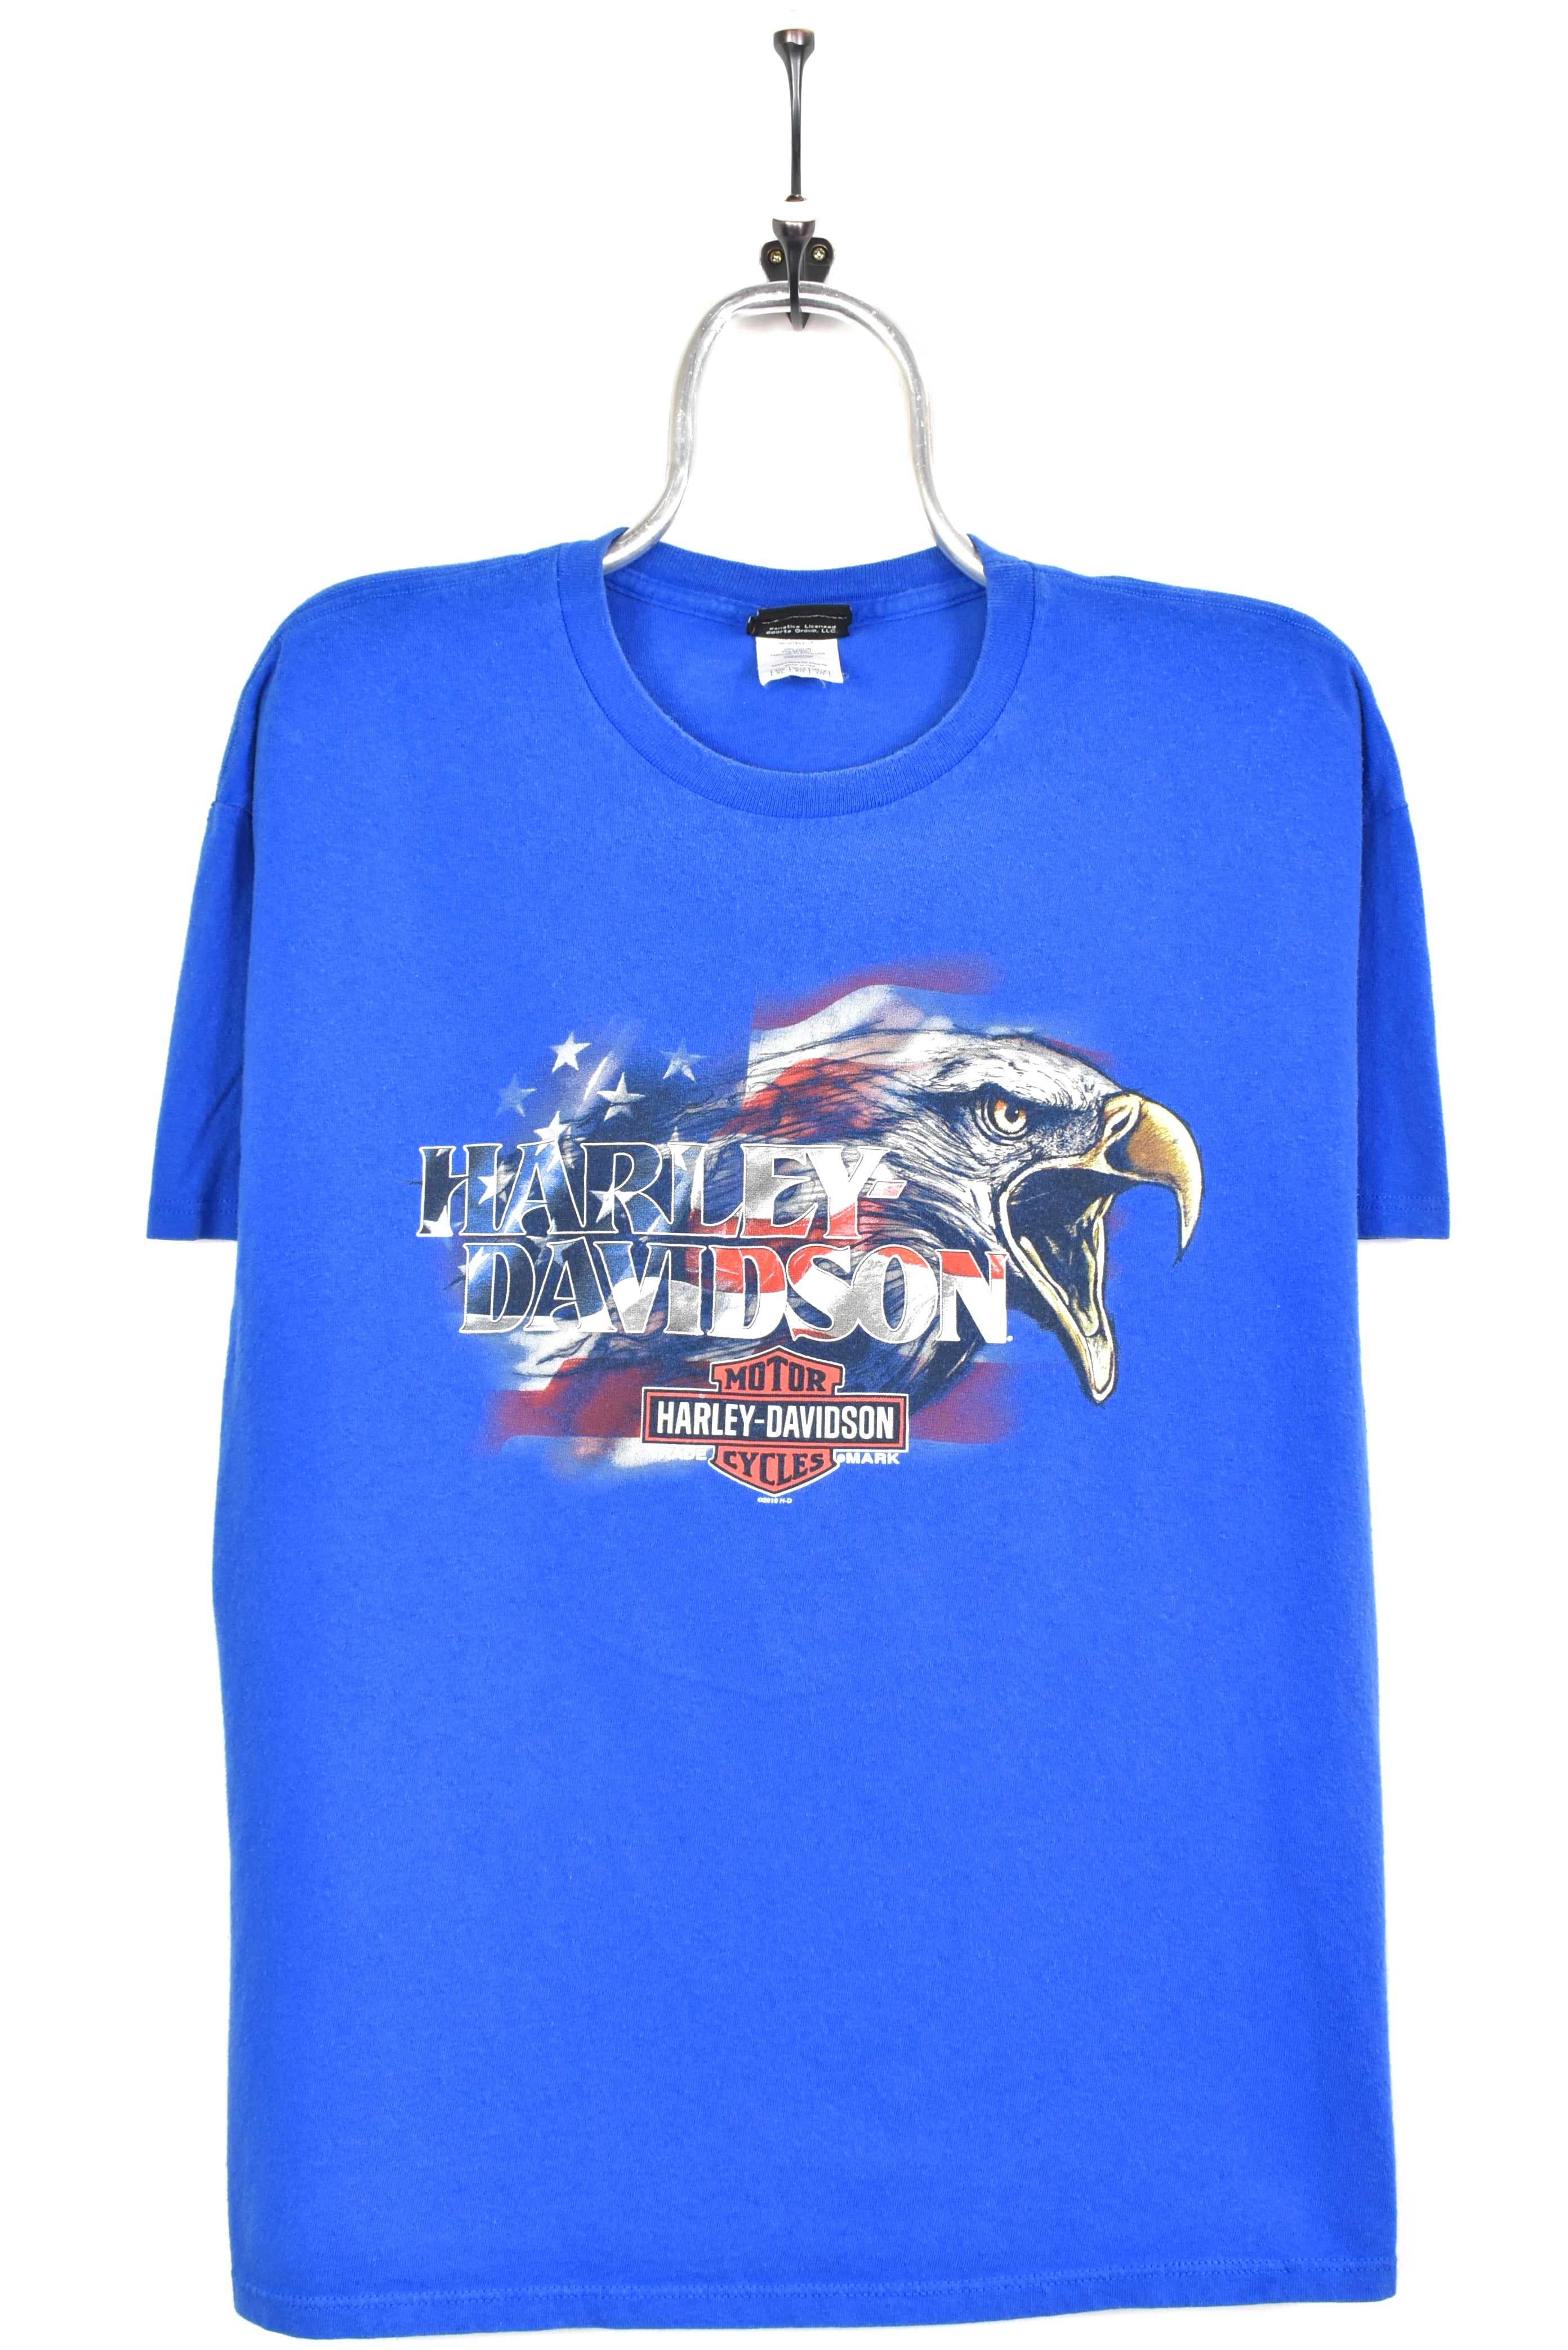 Modern Harley Davidson blue t-shirt | Large HARLEY DAVIDSON